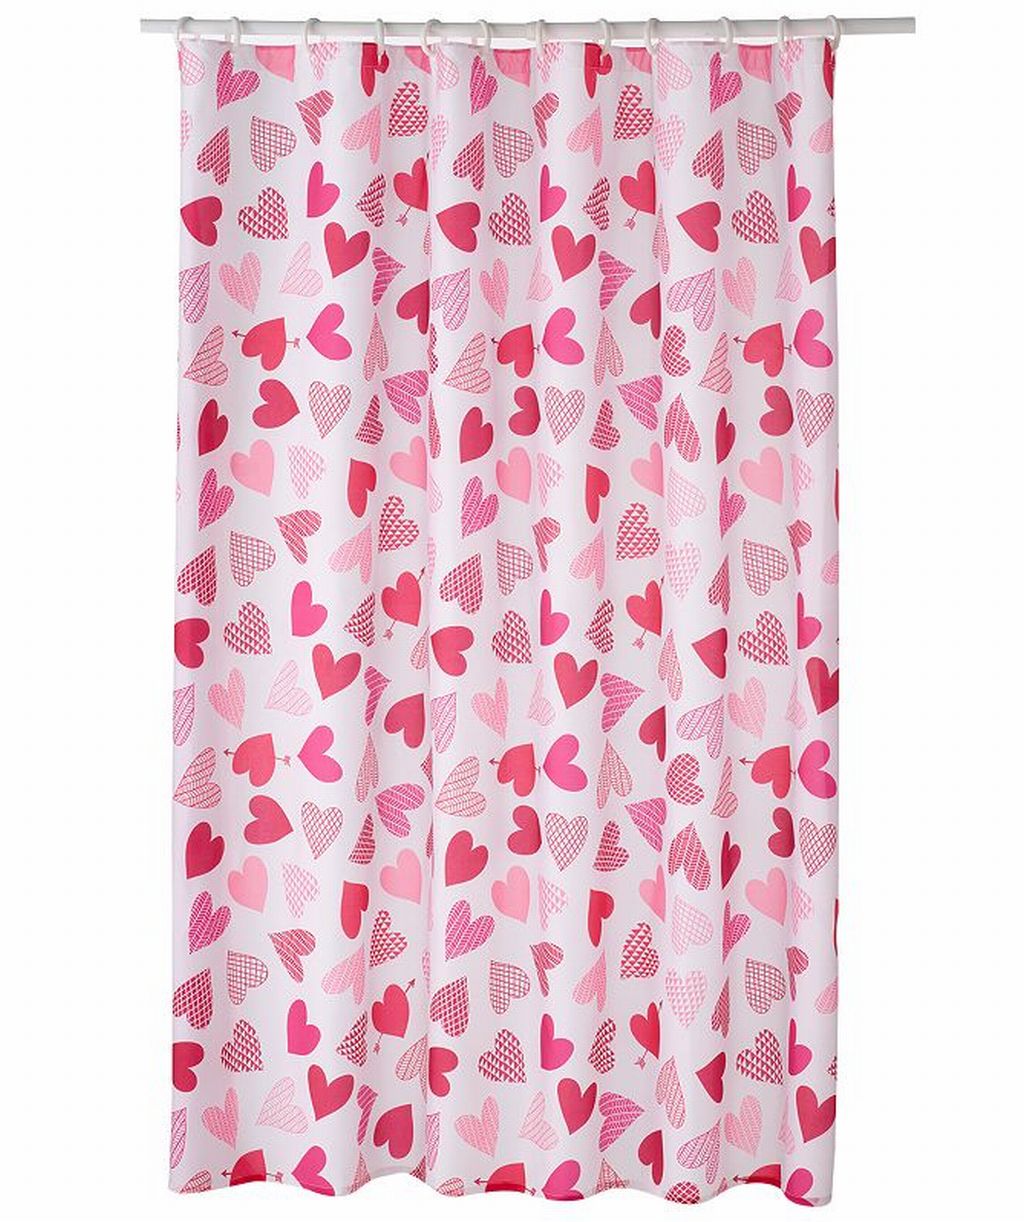 Waterproof Fabric Valentine Pink Background Love Heart Bathroom Shower Curtain